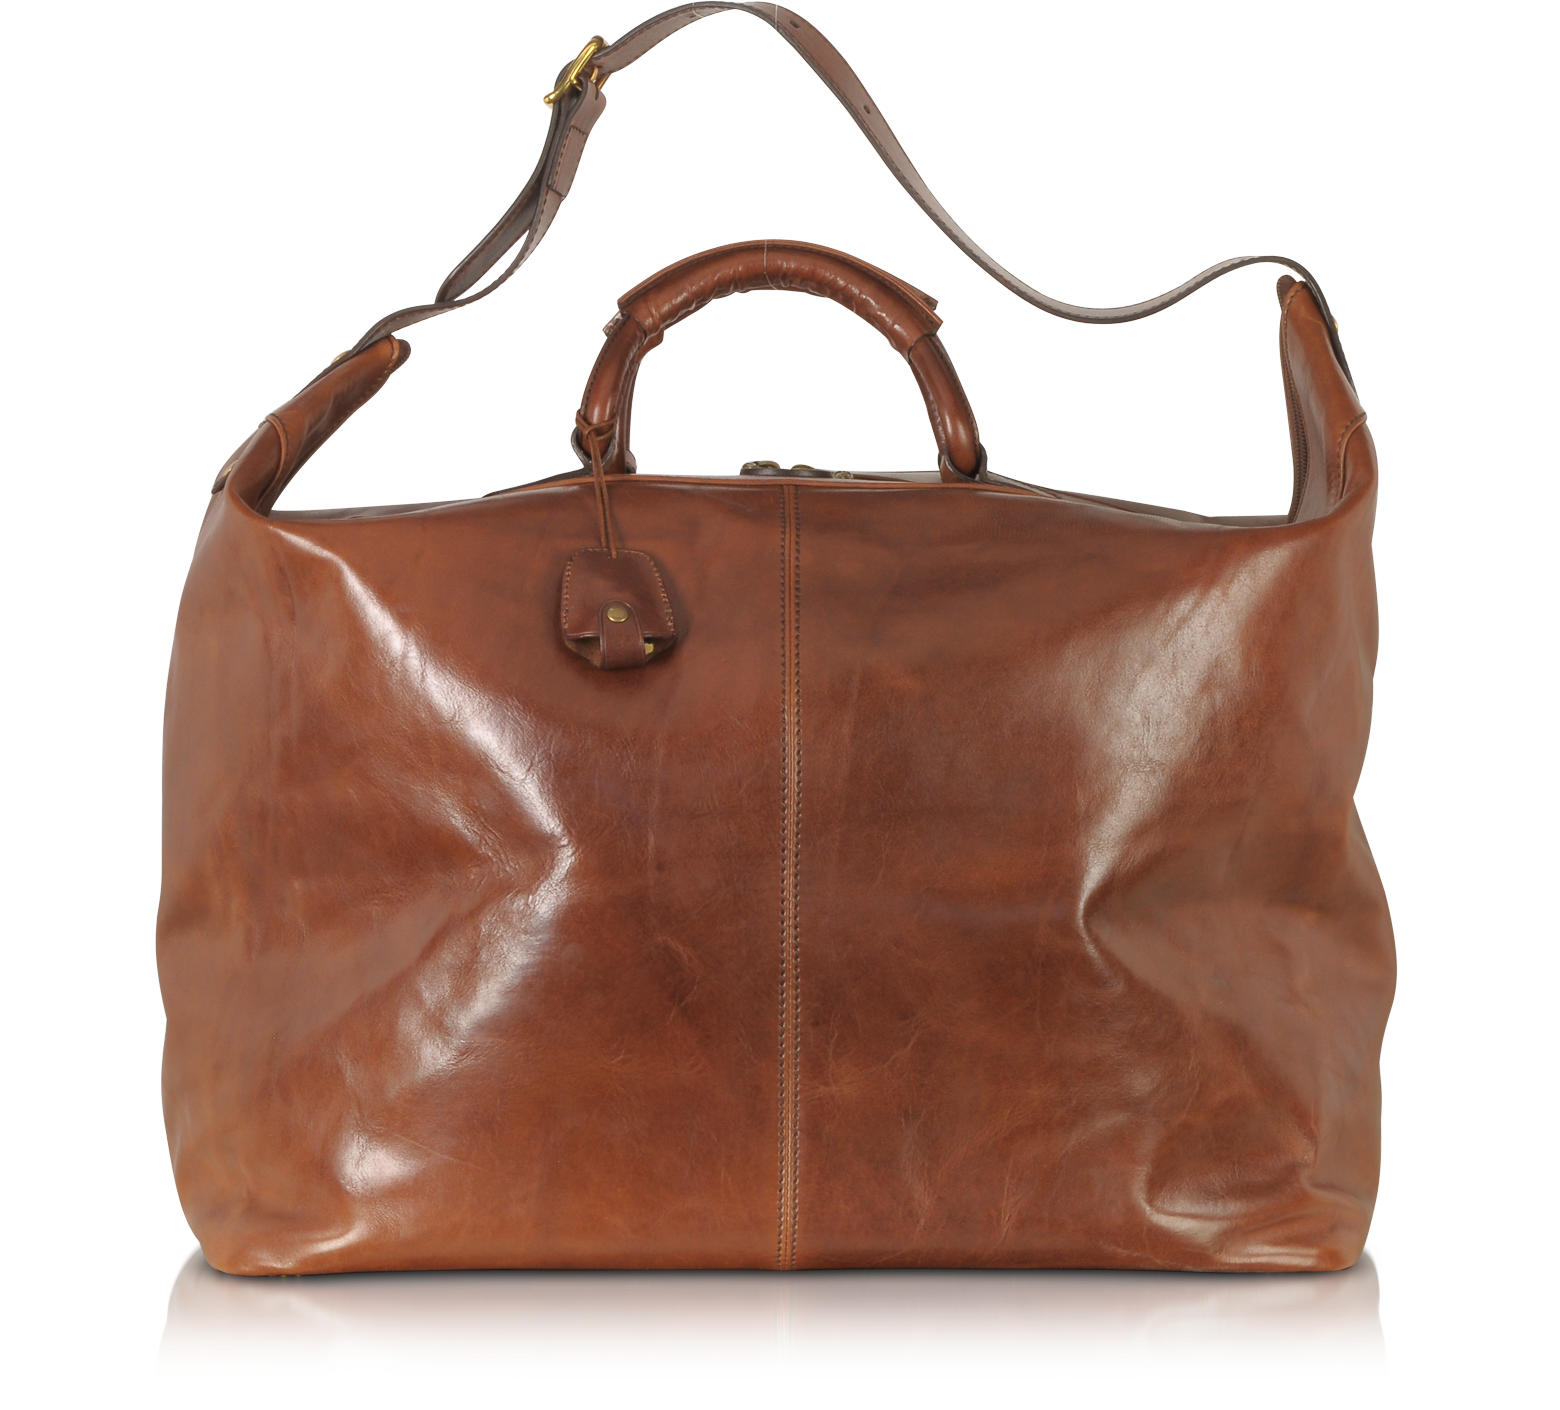 The Bridge Story Viaggio Marrone Leather Weekender Bag at FORZIERI